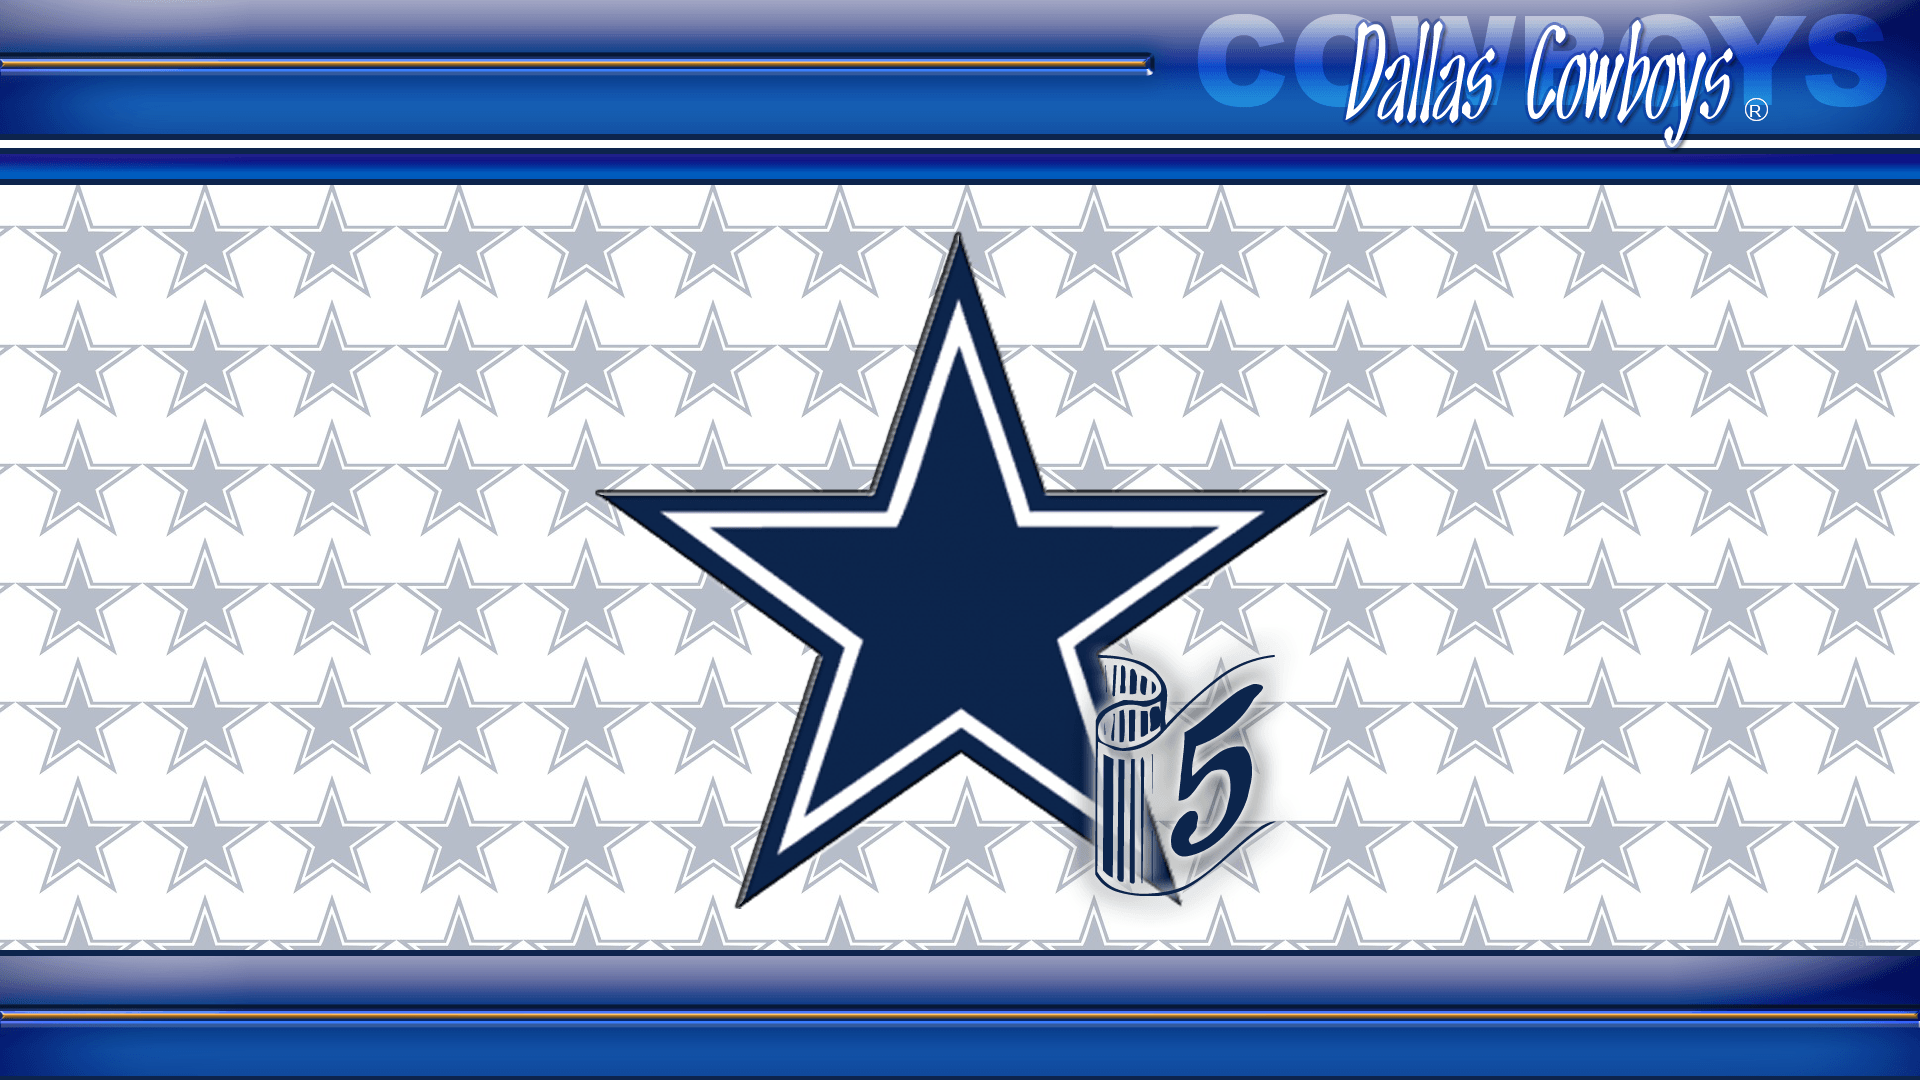 Dallas Cowboys Flag Wallpaper 29230 Hi Resolution. Best Free JPG